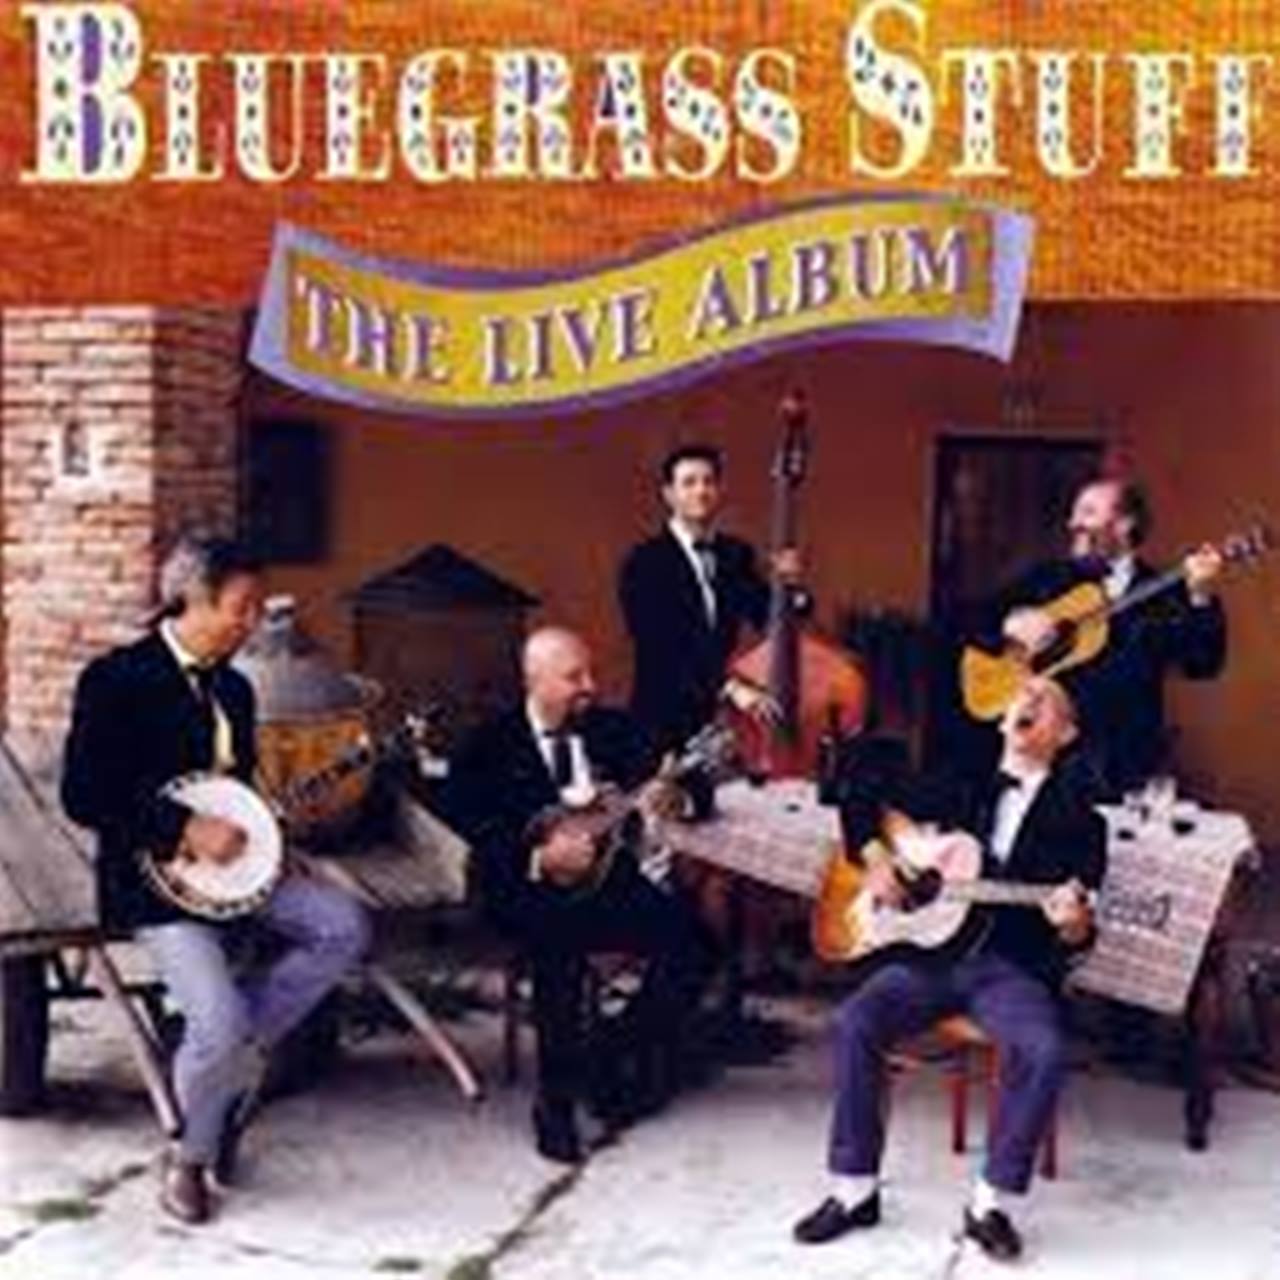 Bluegrass Stuff – The Live Album cover album